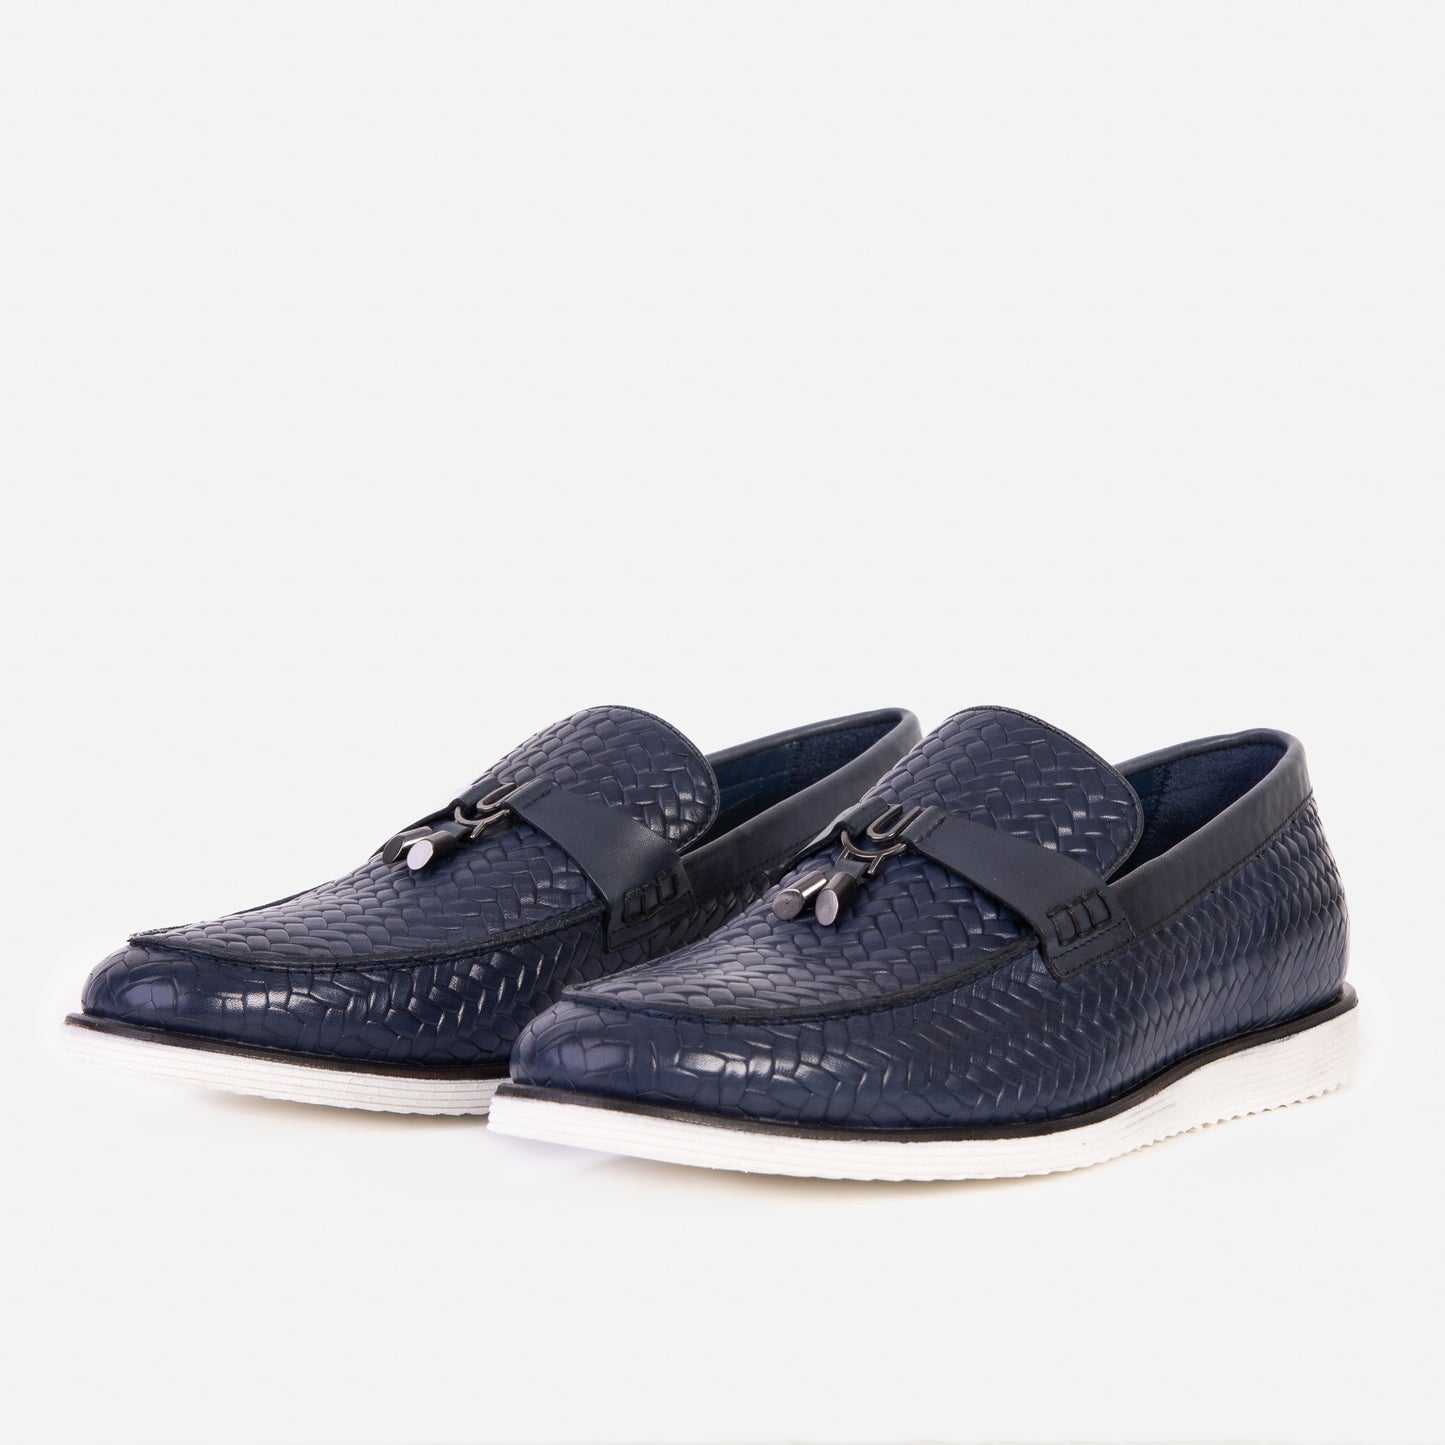 The Sperry Jeans Blue Leather Tassel Loafer Men Shoe